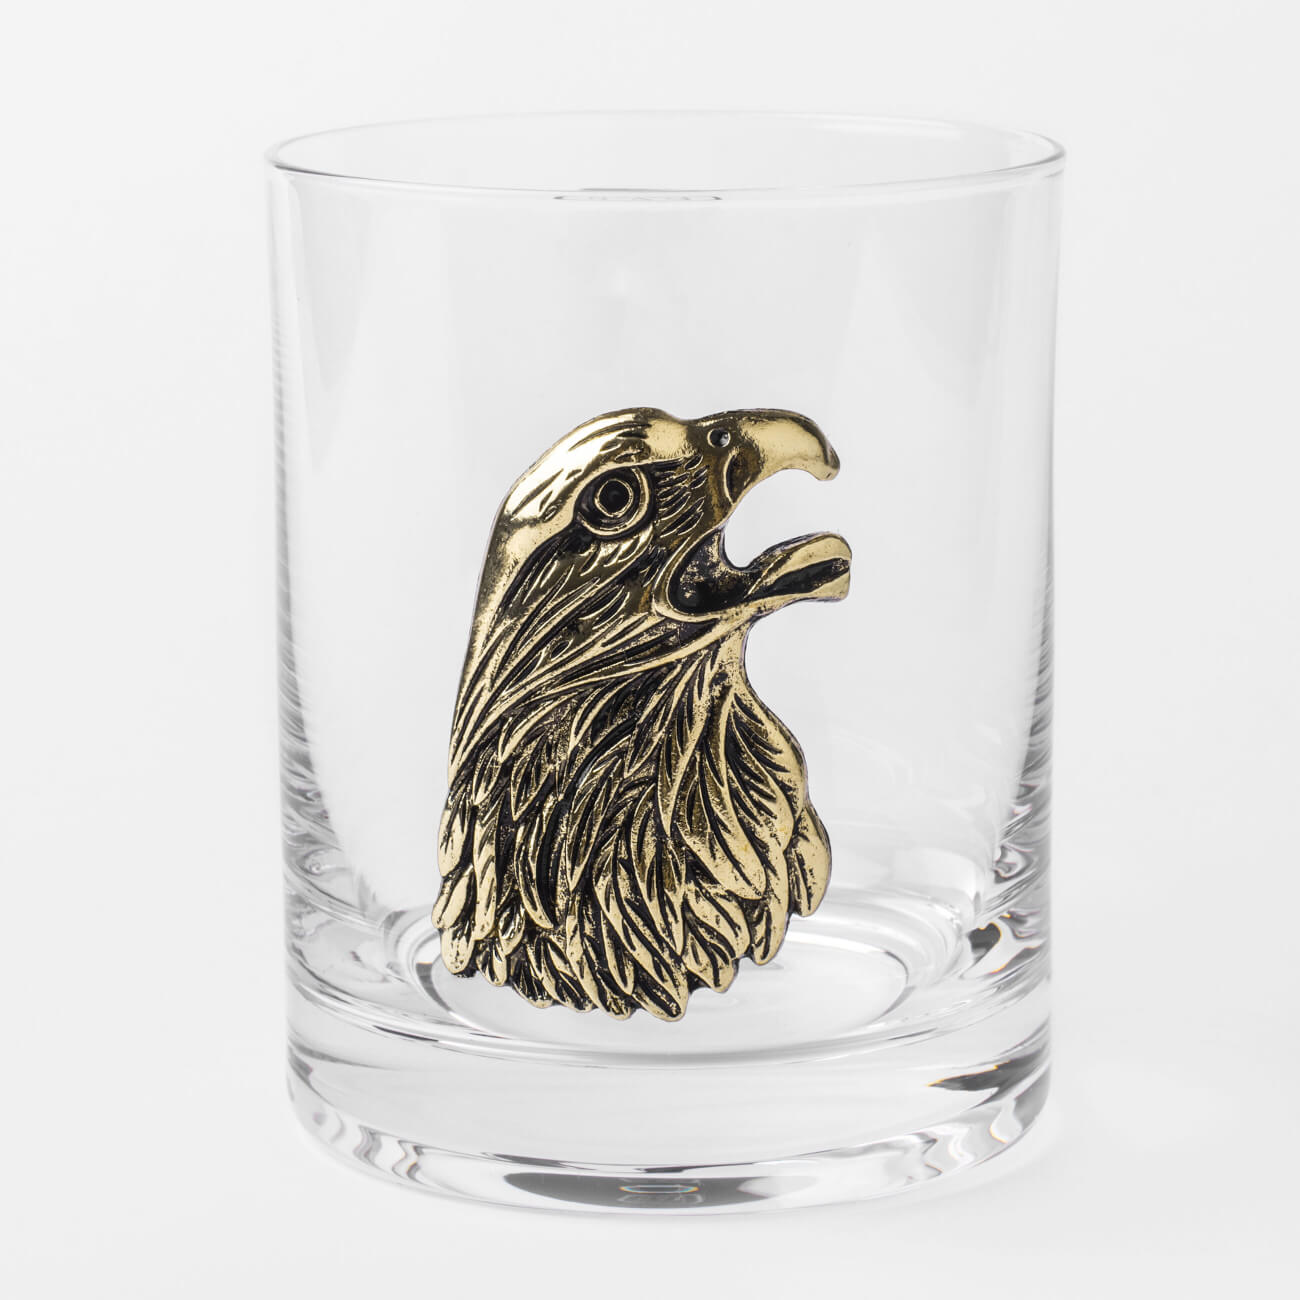 Стакан для виски, 340 мл, стекло/металл, золотистый, Орел, Lux elements римский орел орел завоеватель